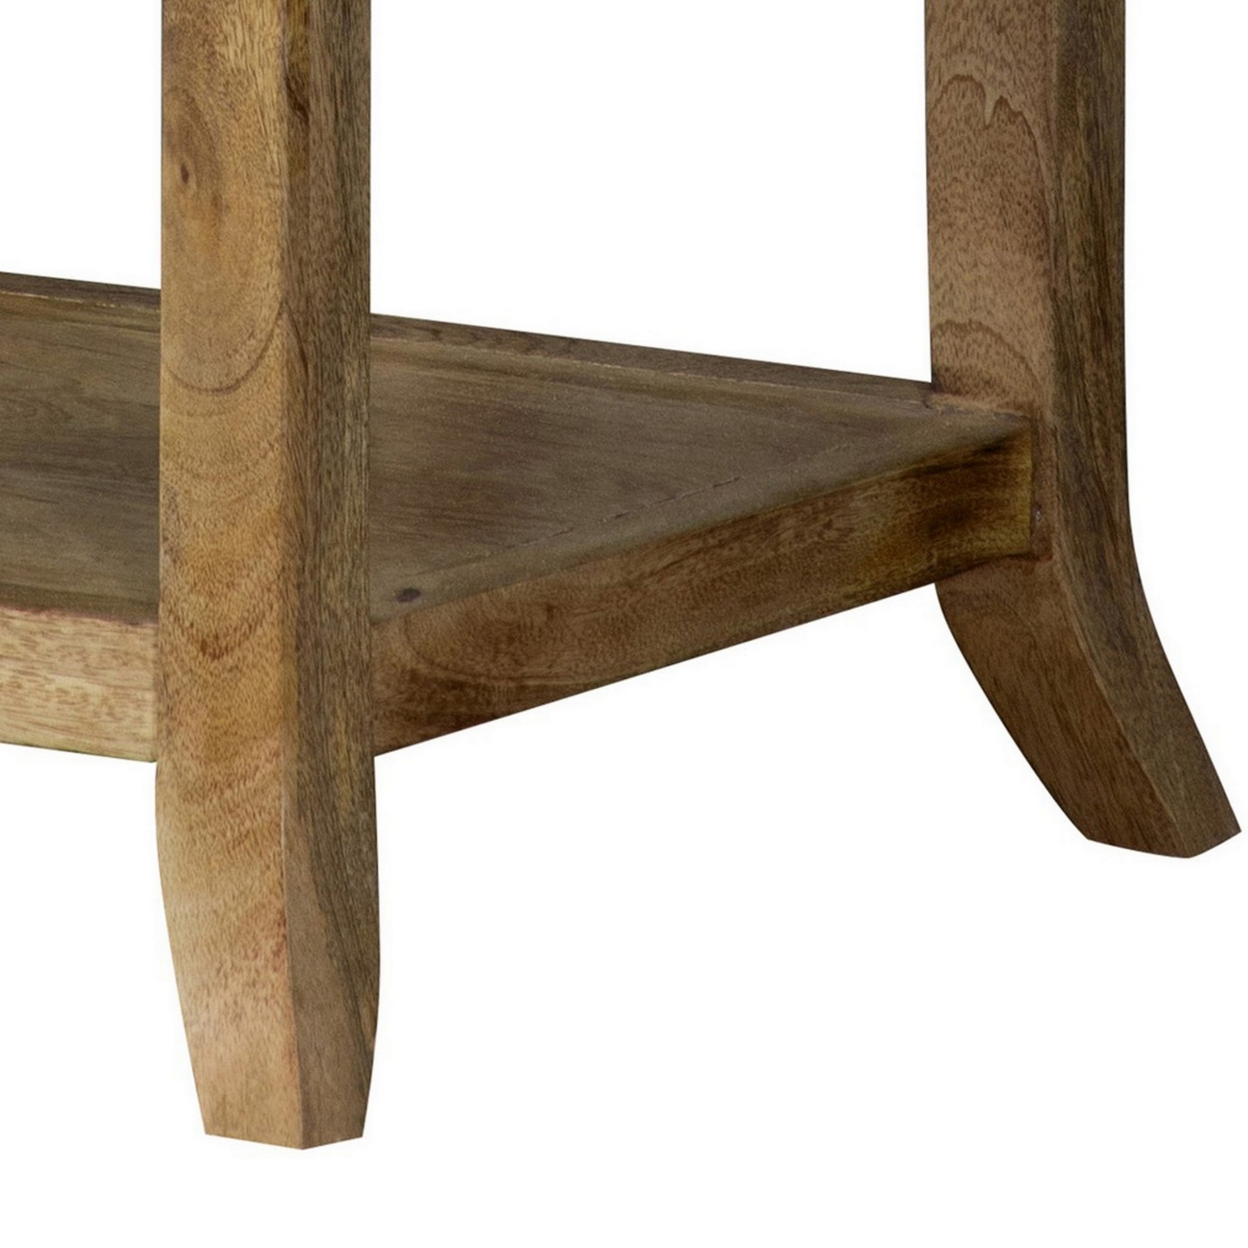 23 Inch Accent Table, 2 Drawers, Single Shelf, Rectangular Brown Wood Frame- Saltoro Sherpi